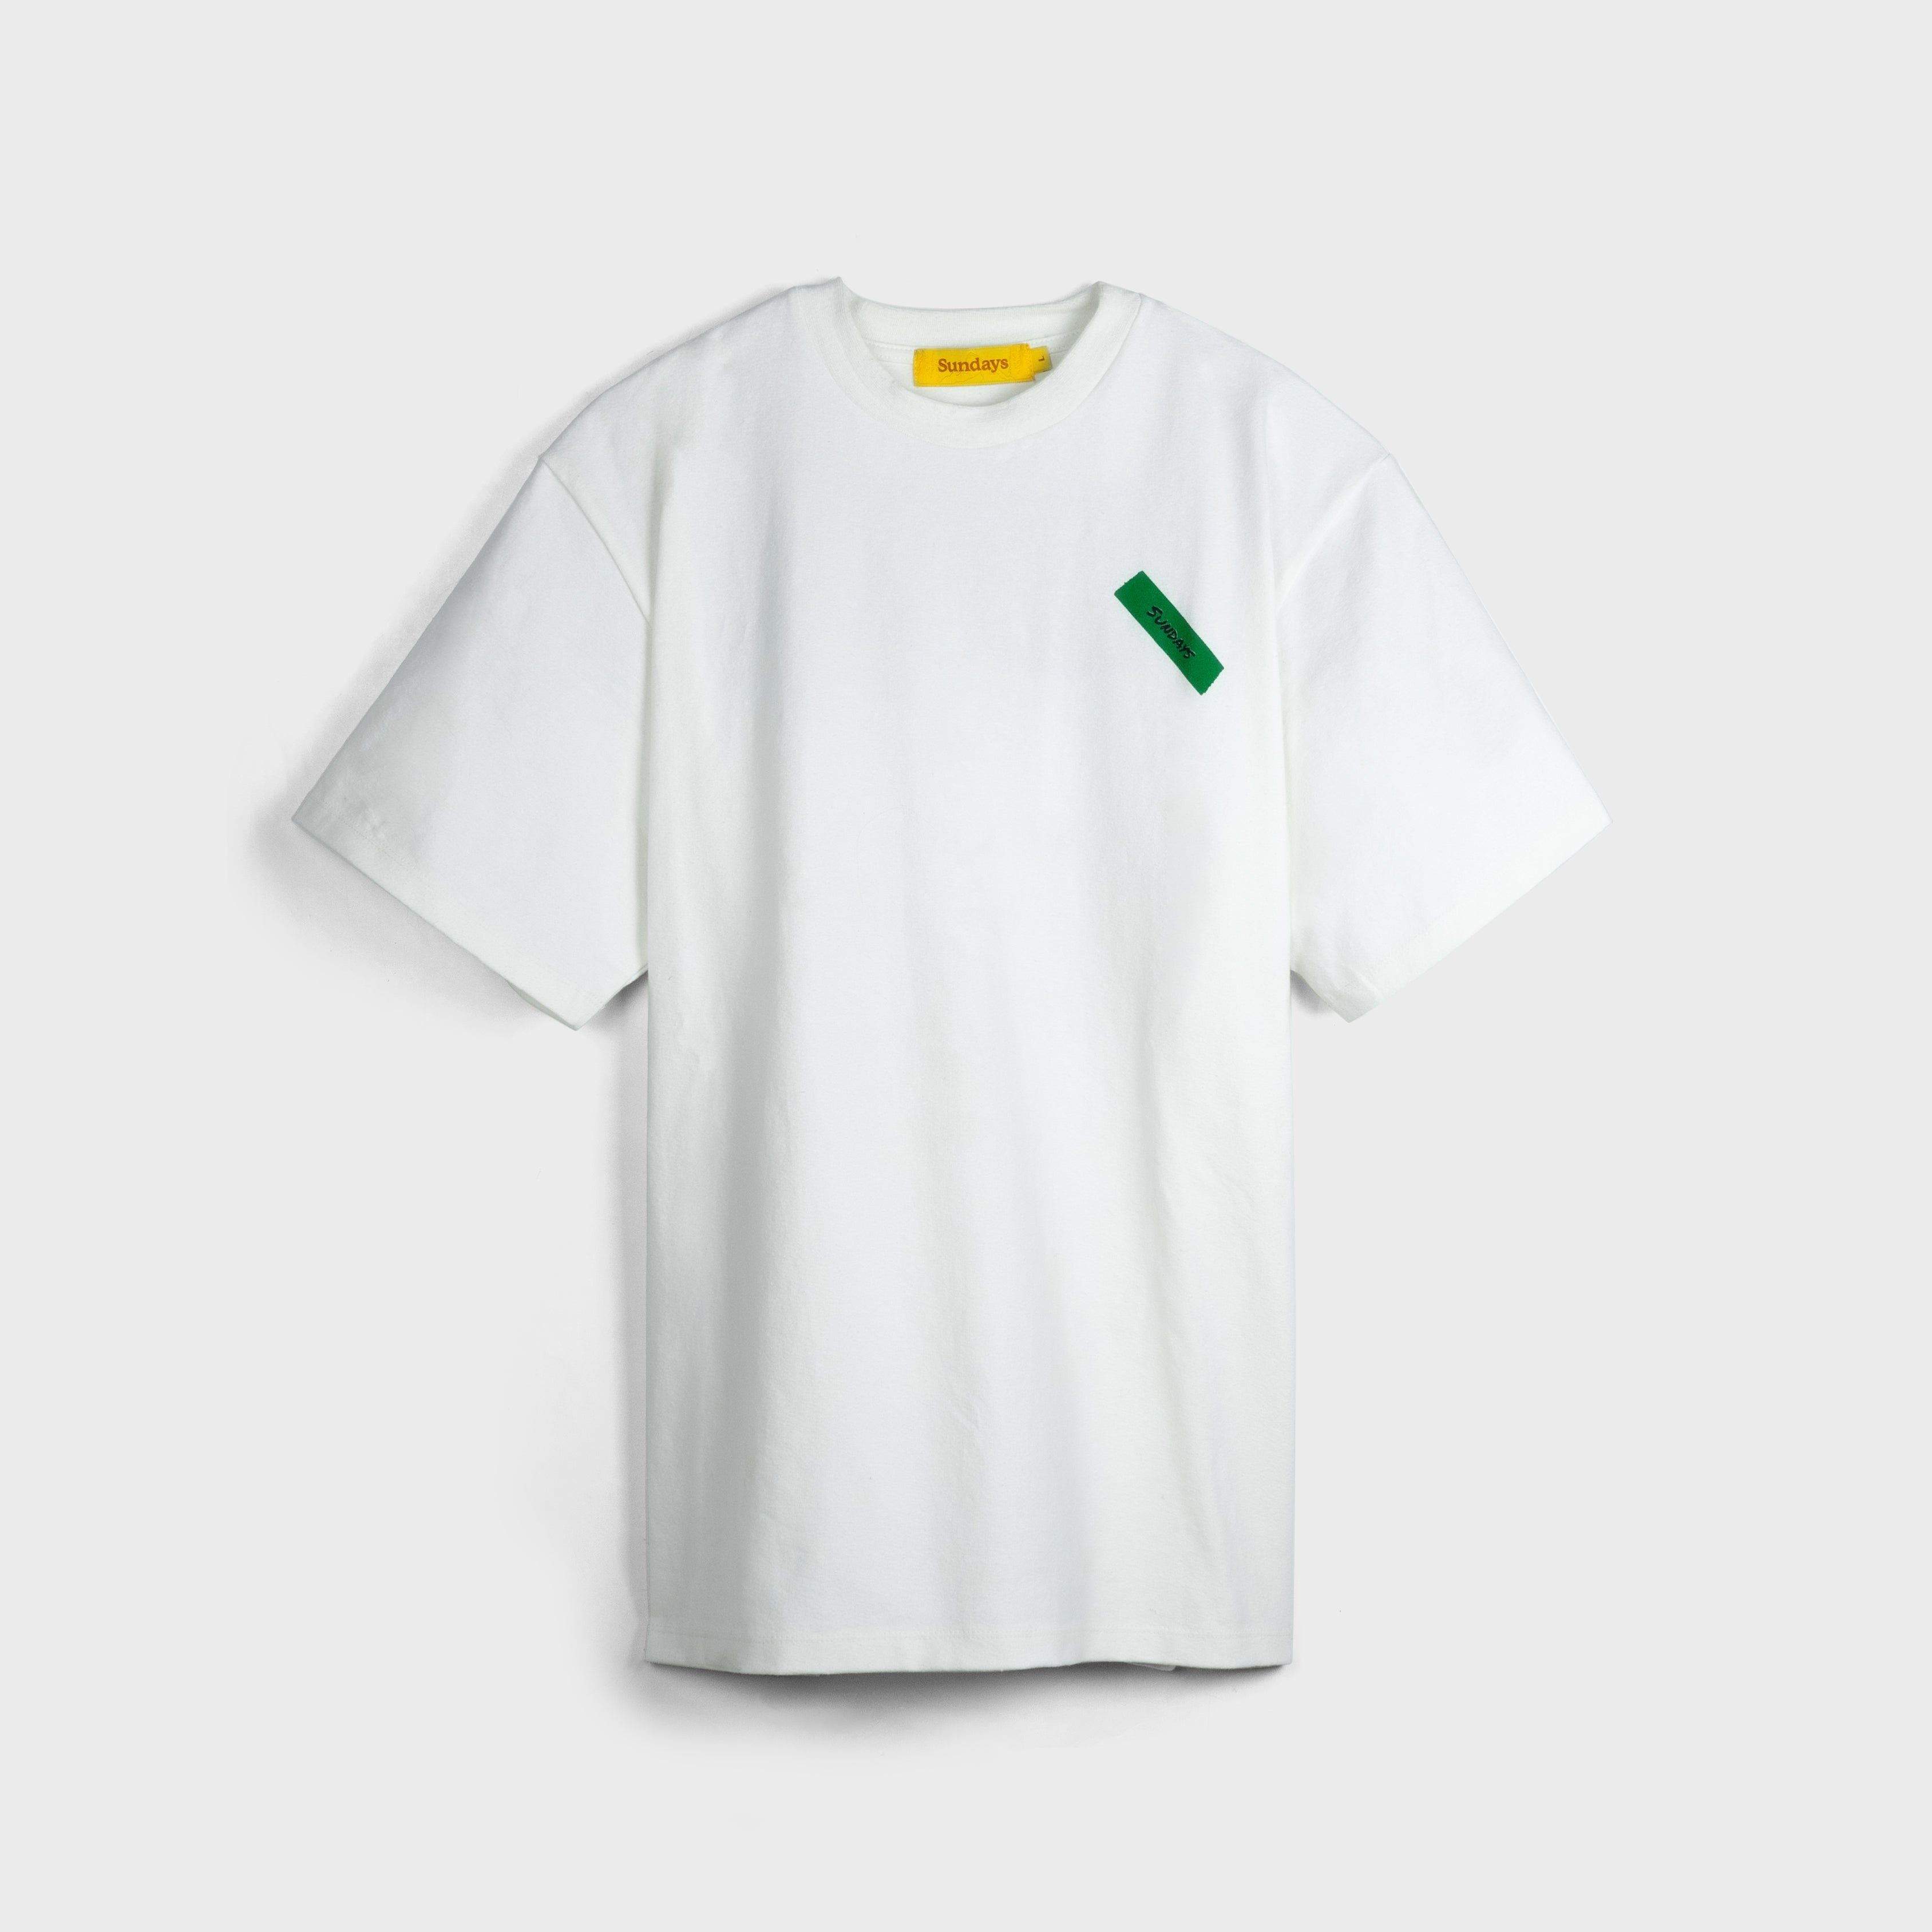 ORT-Shirts-12.jpg